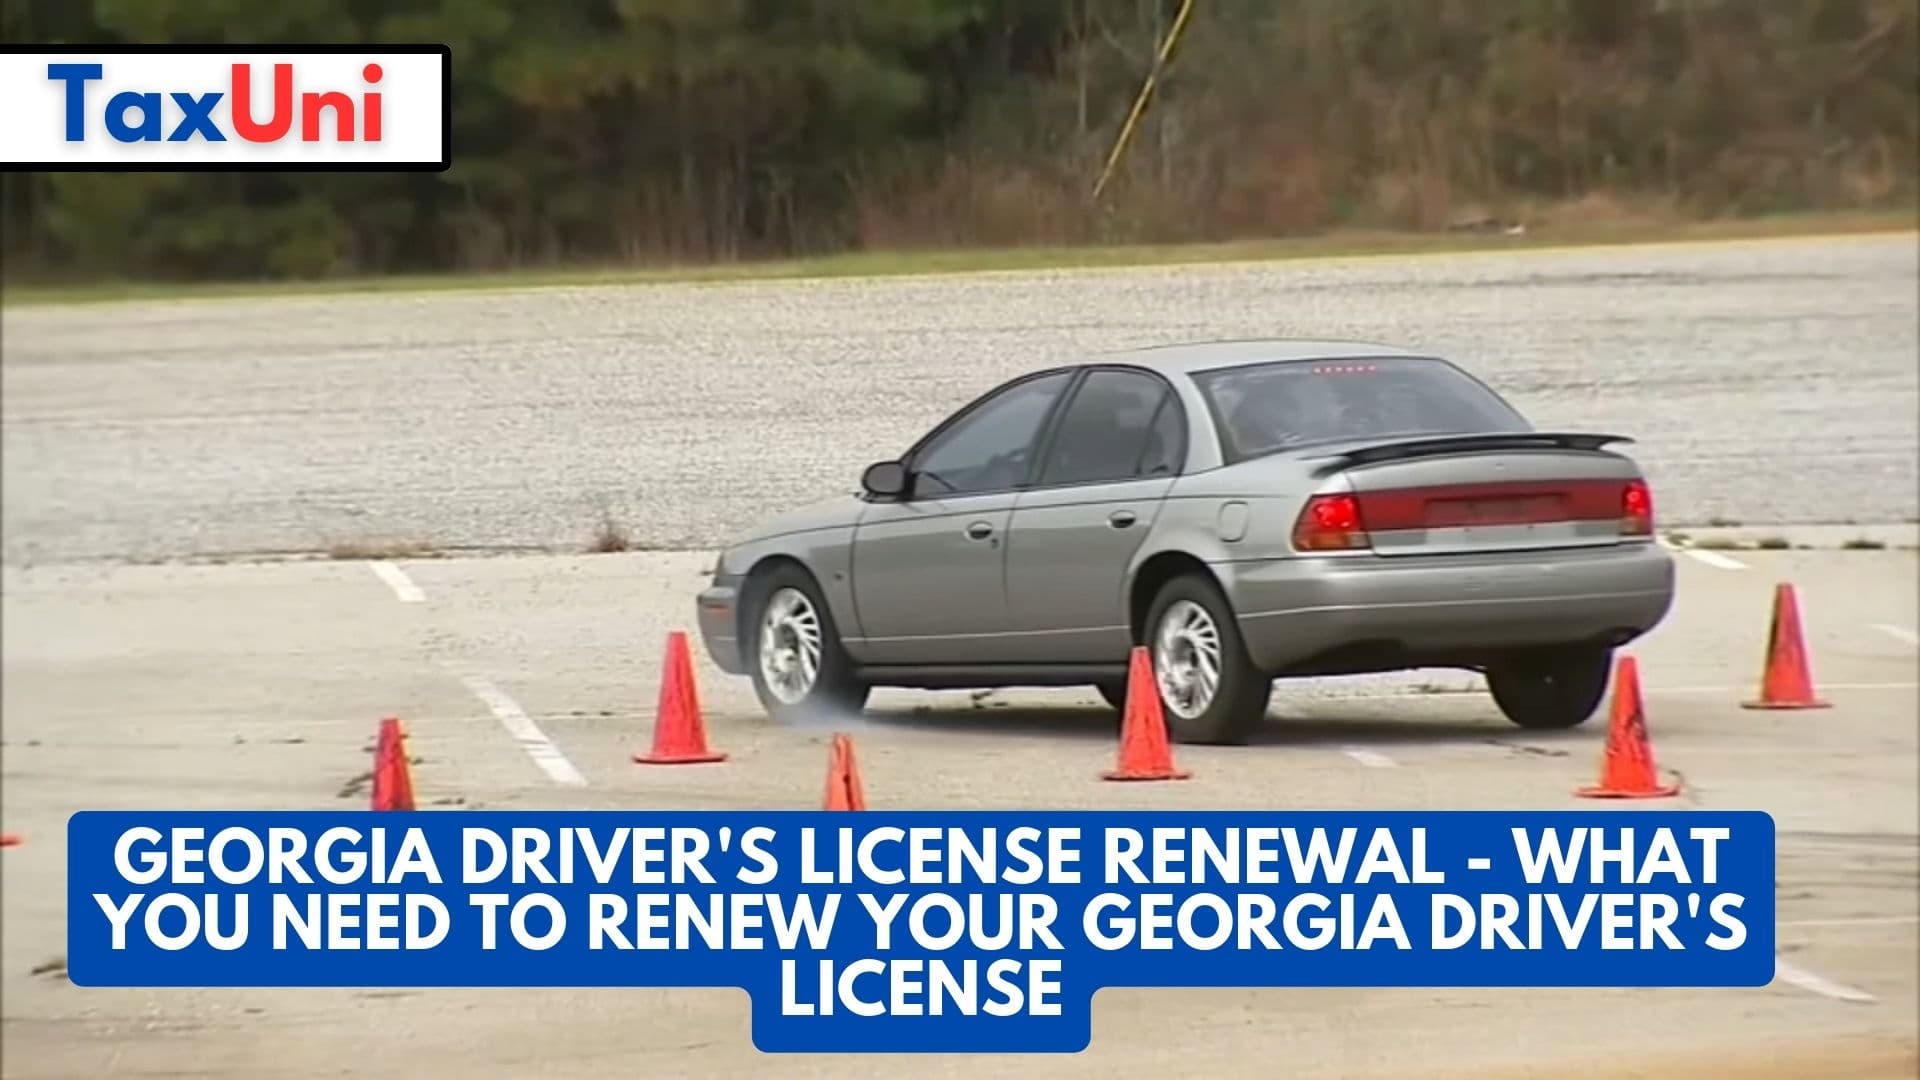 Georgia Driver's License Renewal - What You Need to Renew Your Georgia Driver's License